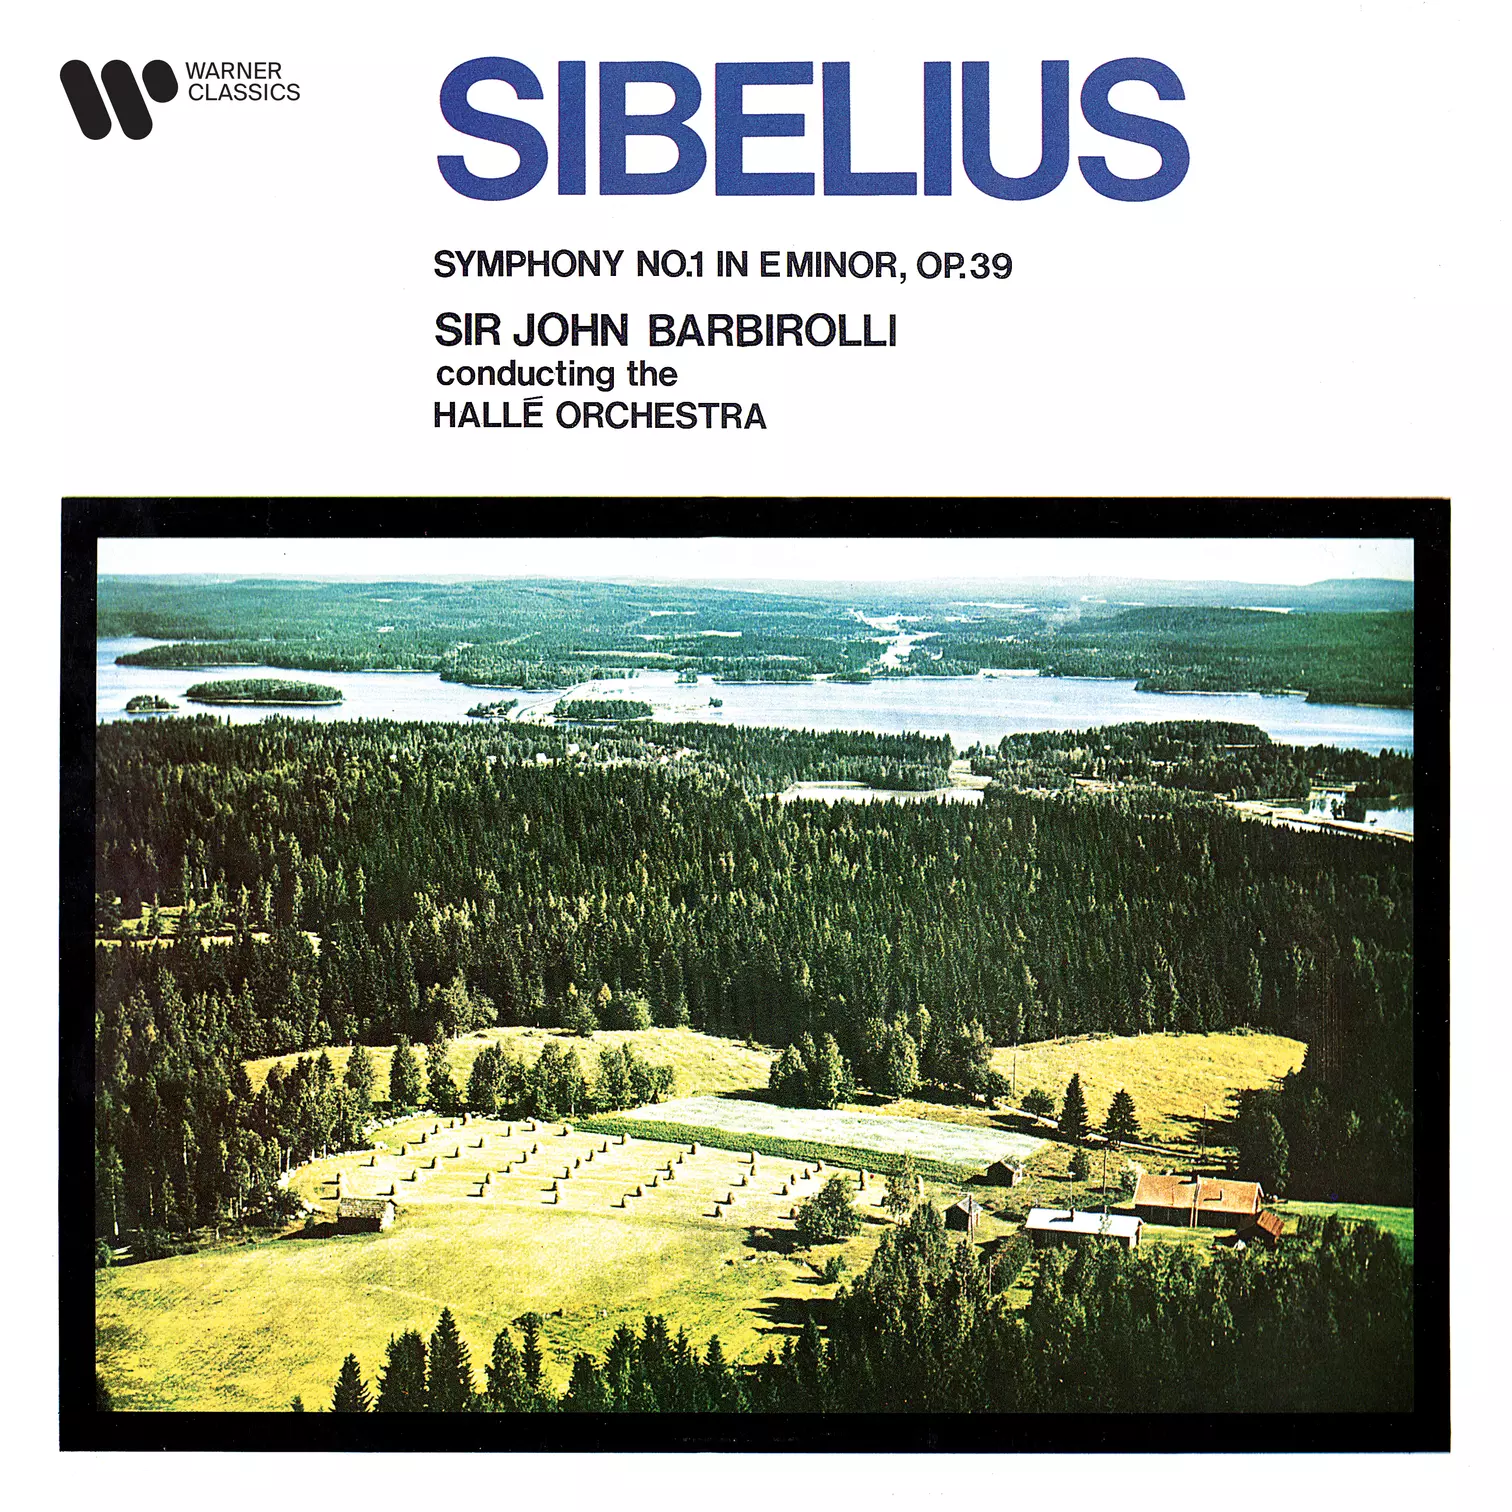 Sibelius: Symphony No. 1